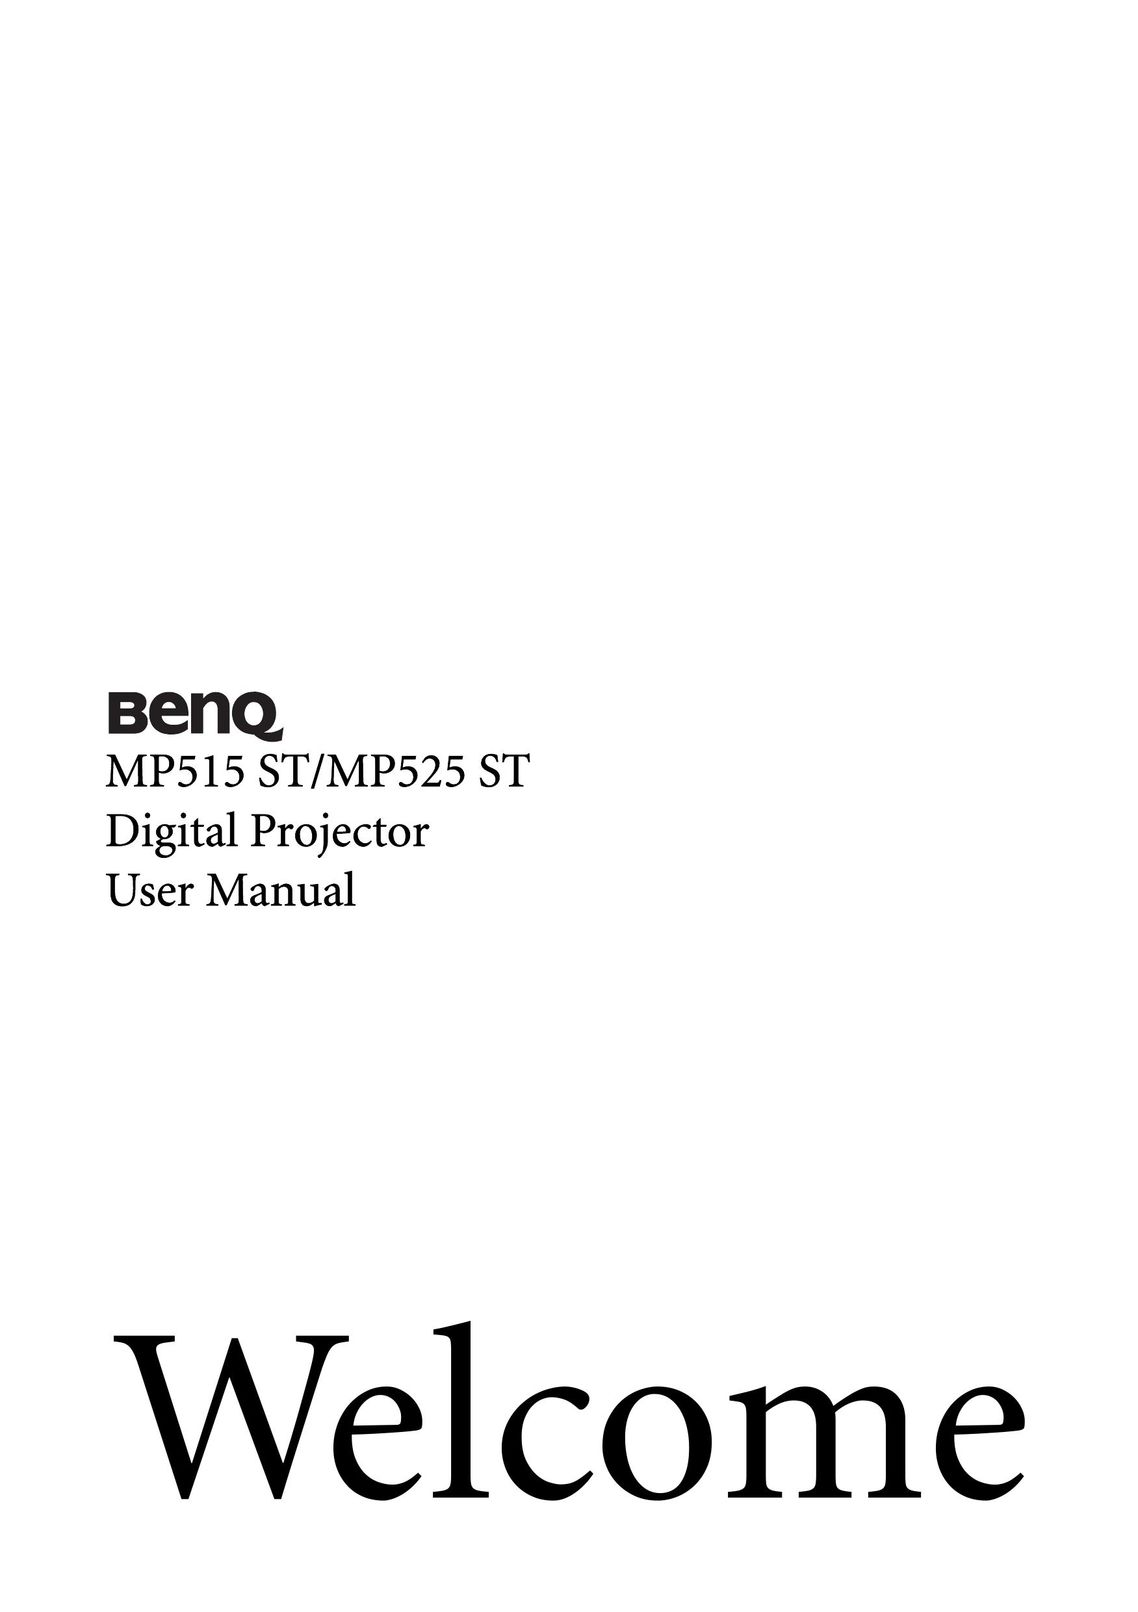 BenQ MP525 ST Projector User Manual